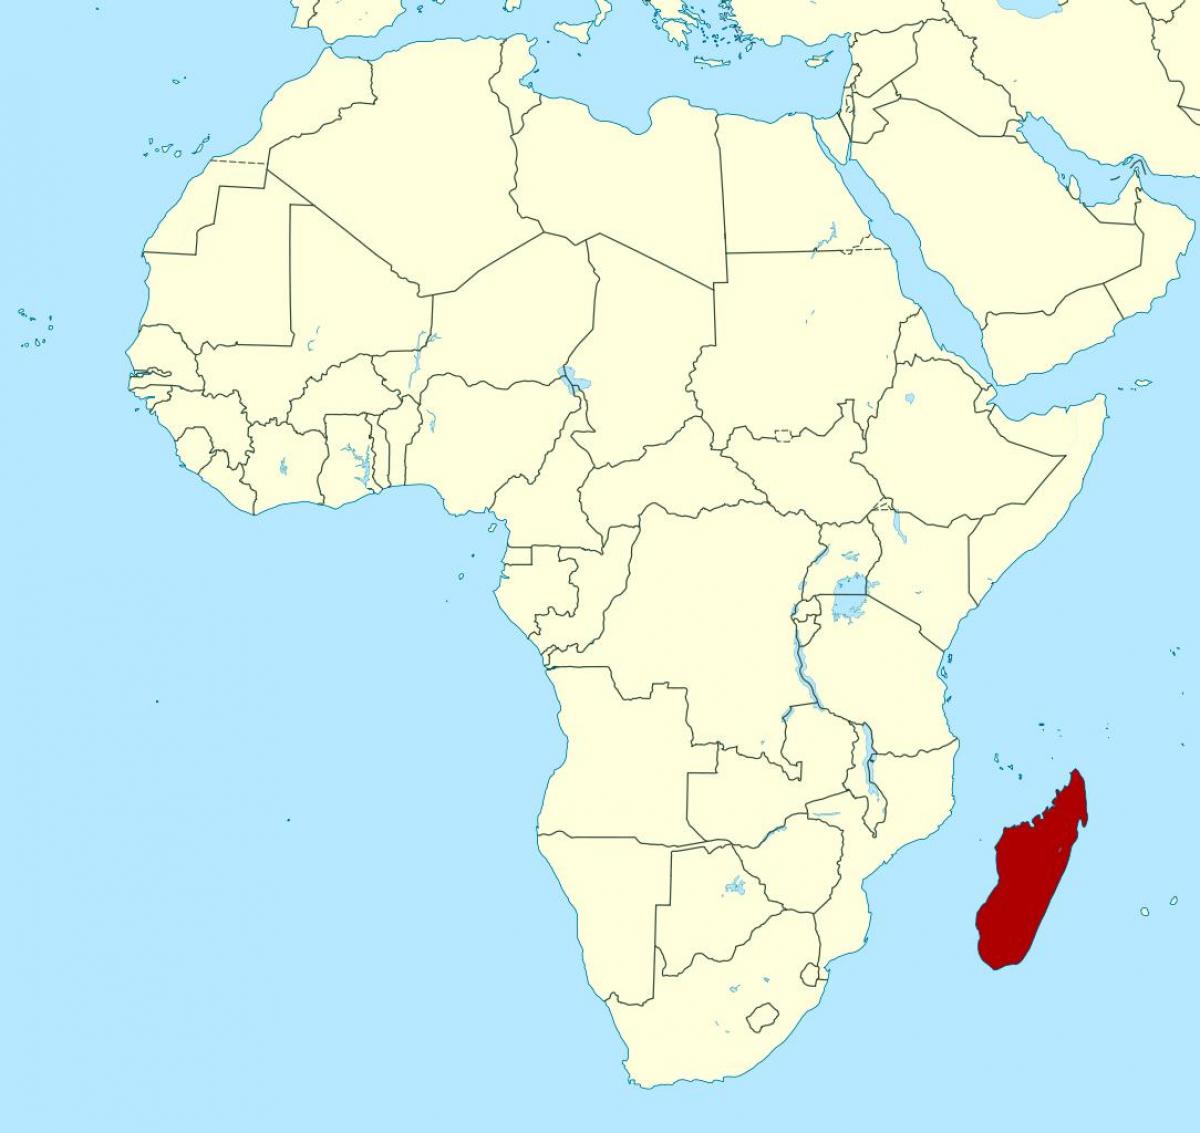 Madagaskaras par āfrikas karte